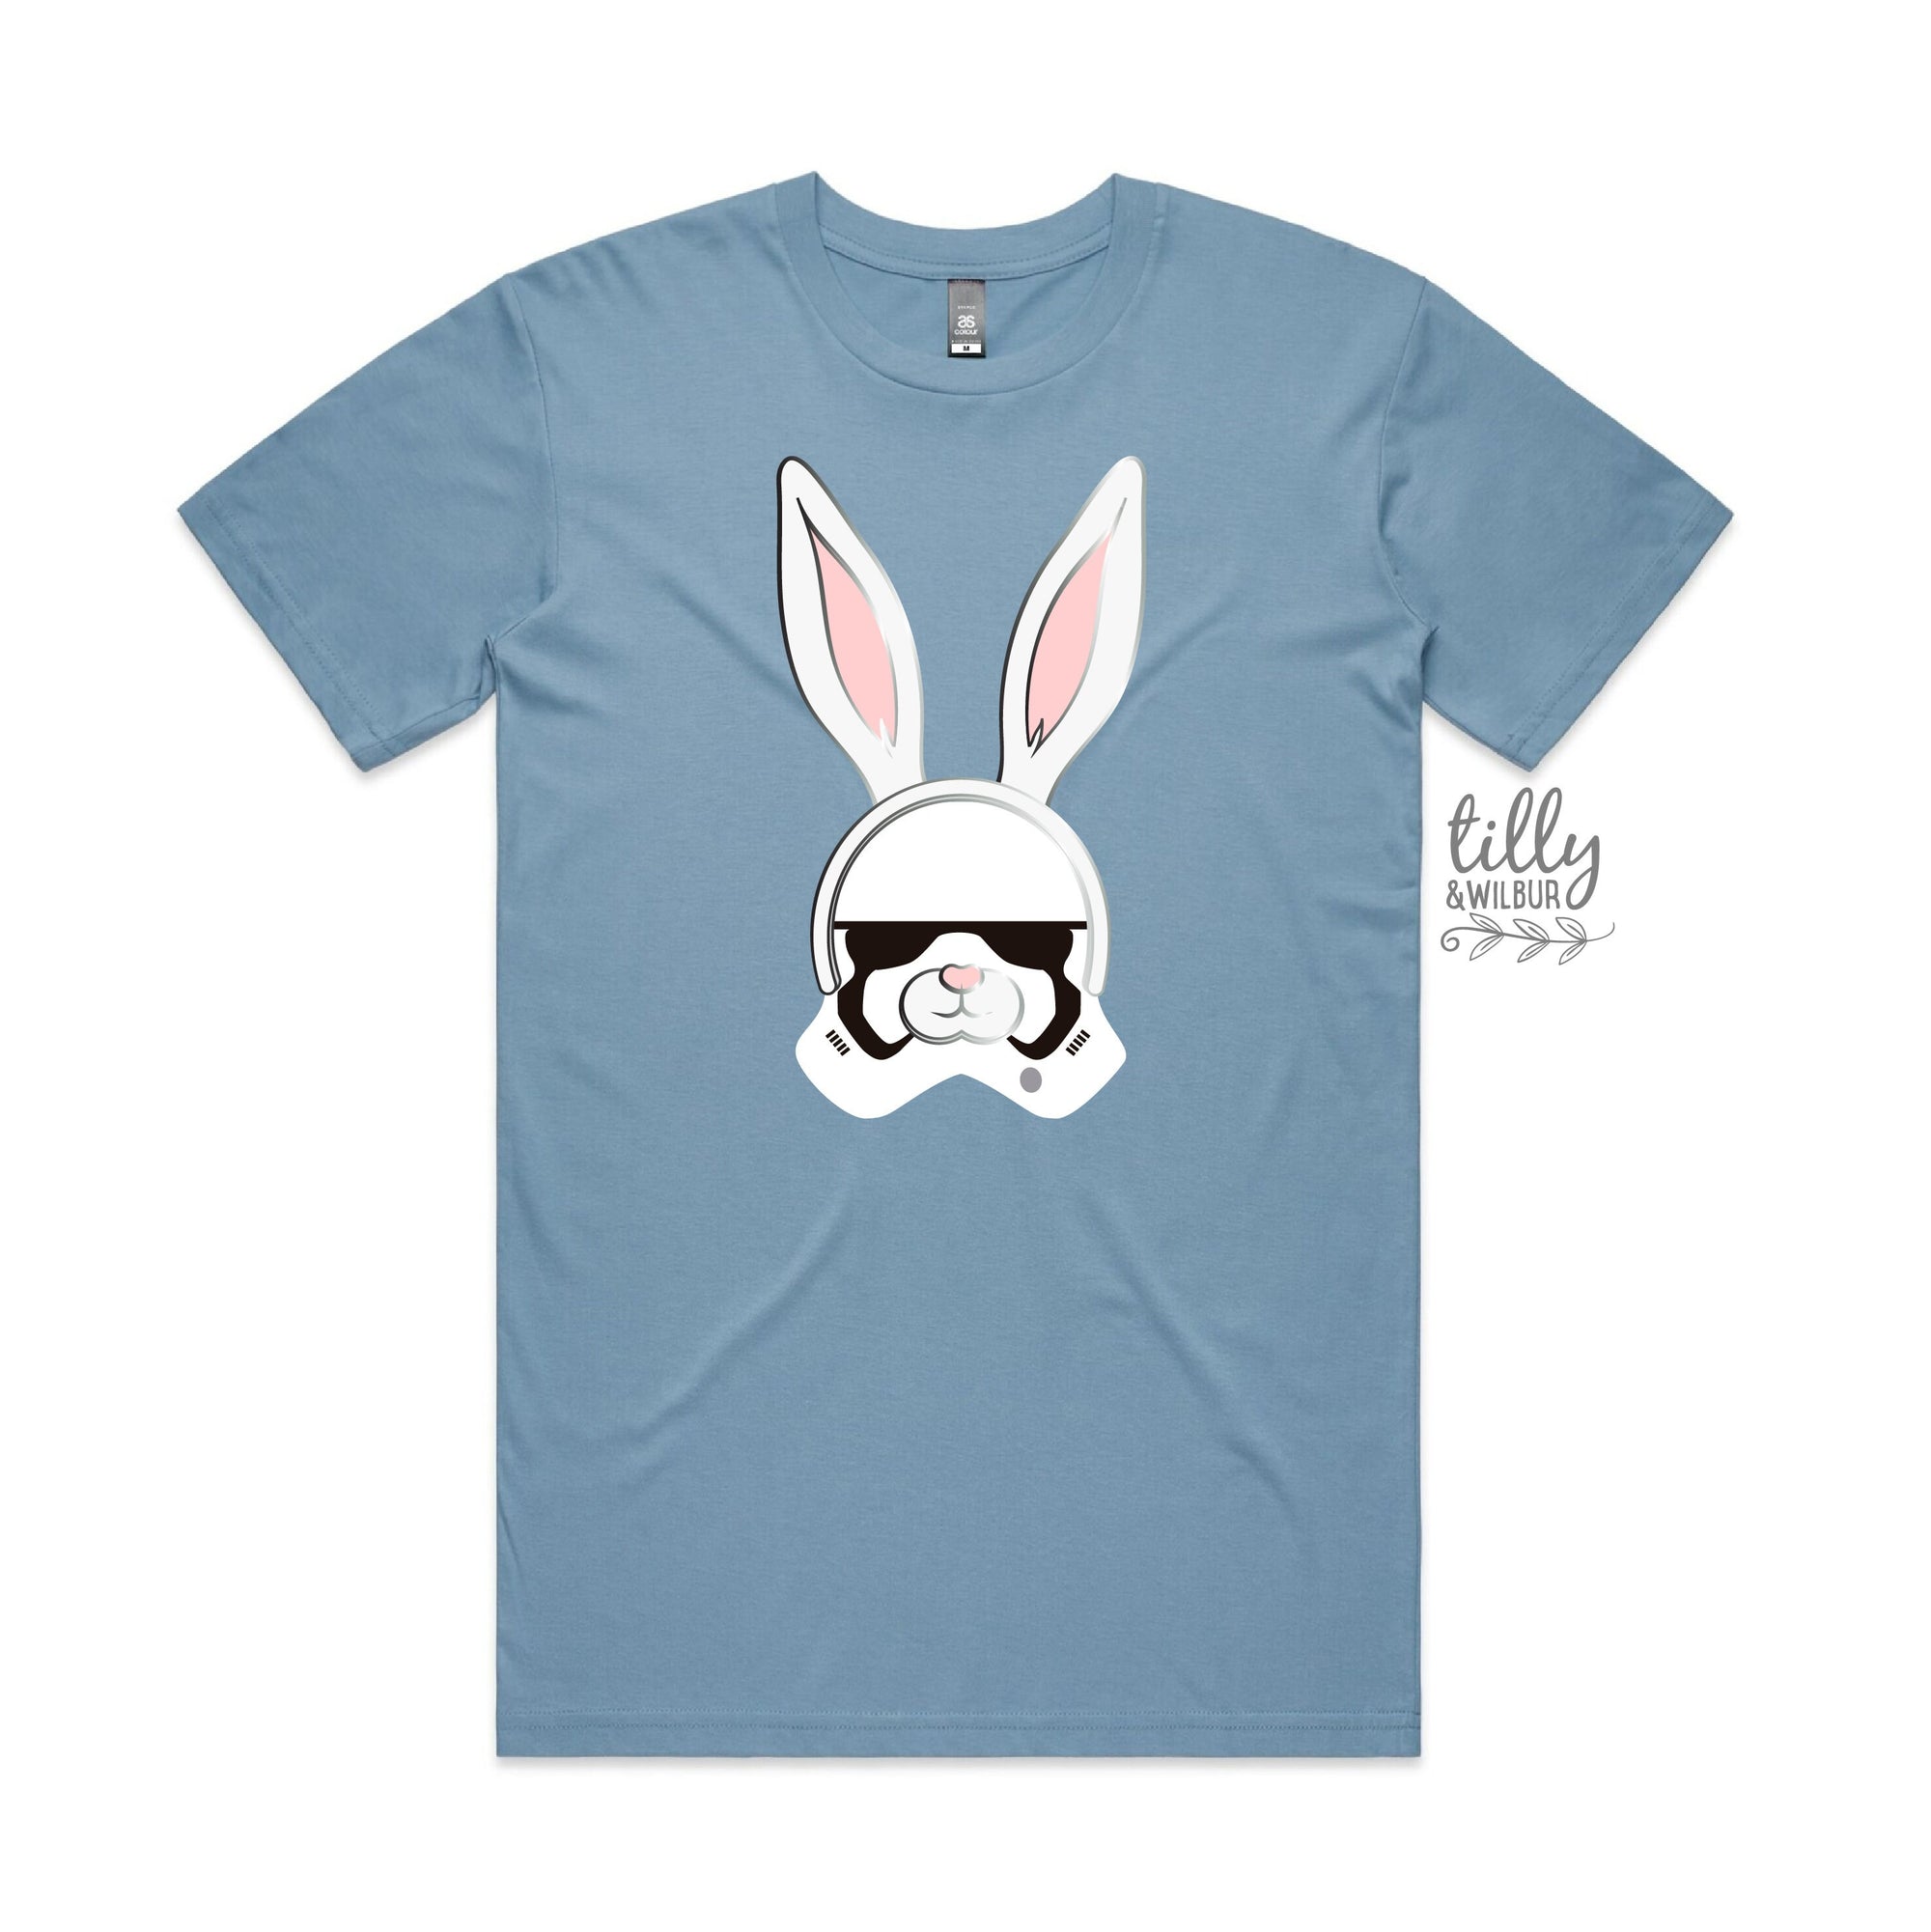 Easter Star Wars Stormtrooper T-Shirt For Men, Easter Shirt, Star Wars T-Shirt, Men's Easter Gift, Men's Easter Shirt, Stormtrooper T-Shirt